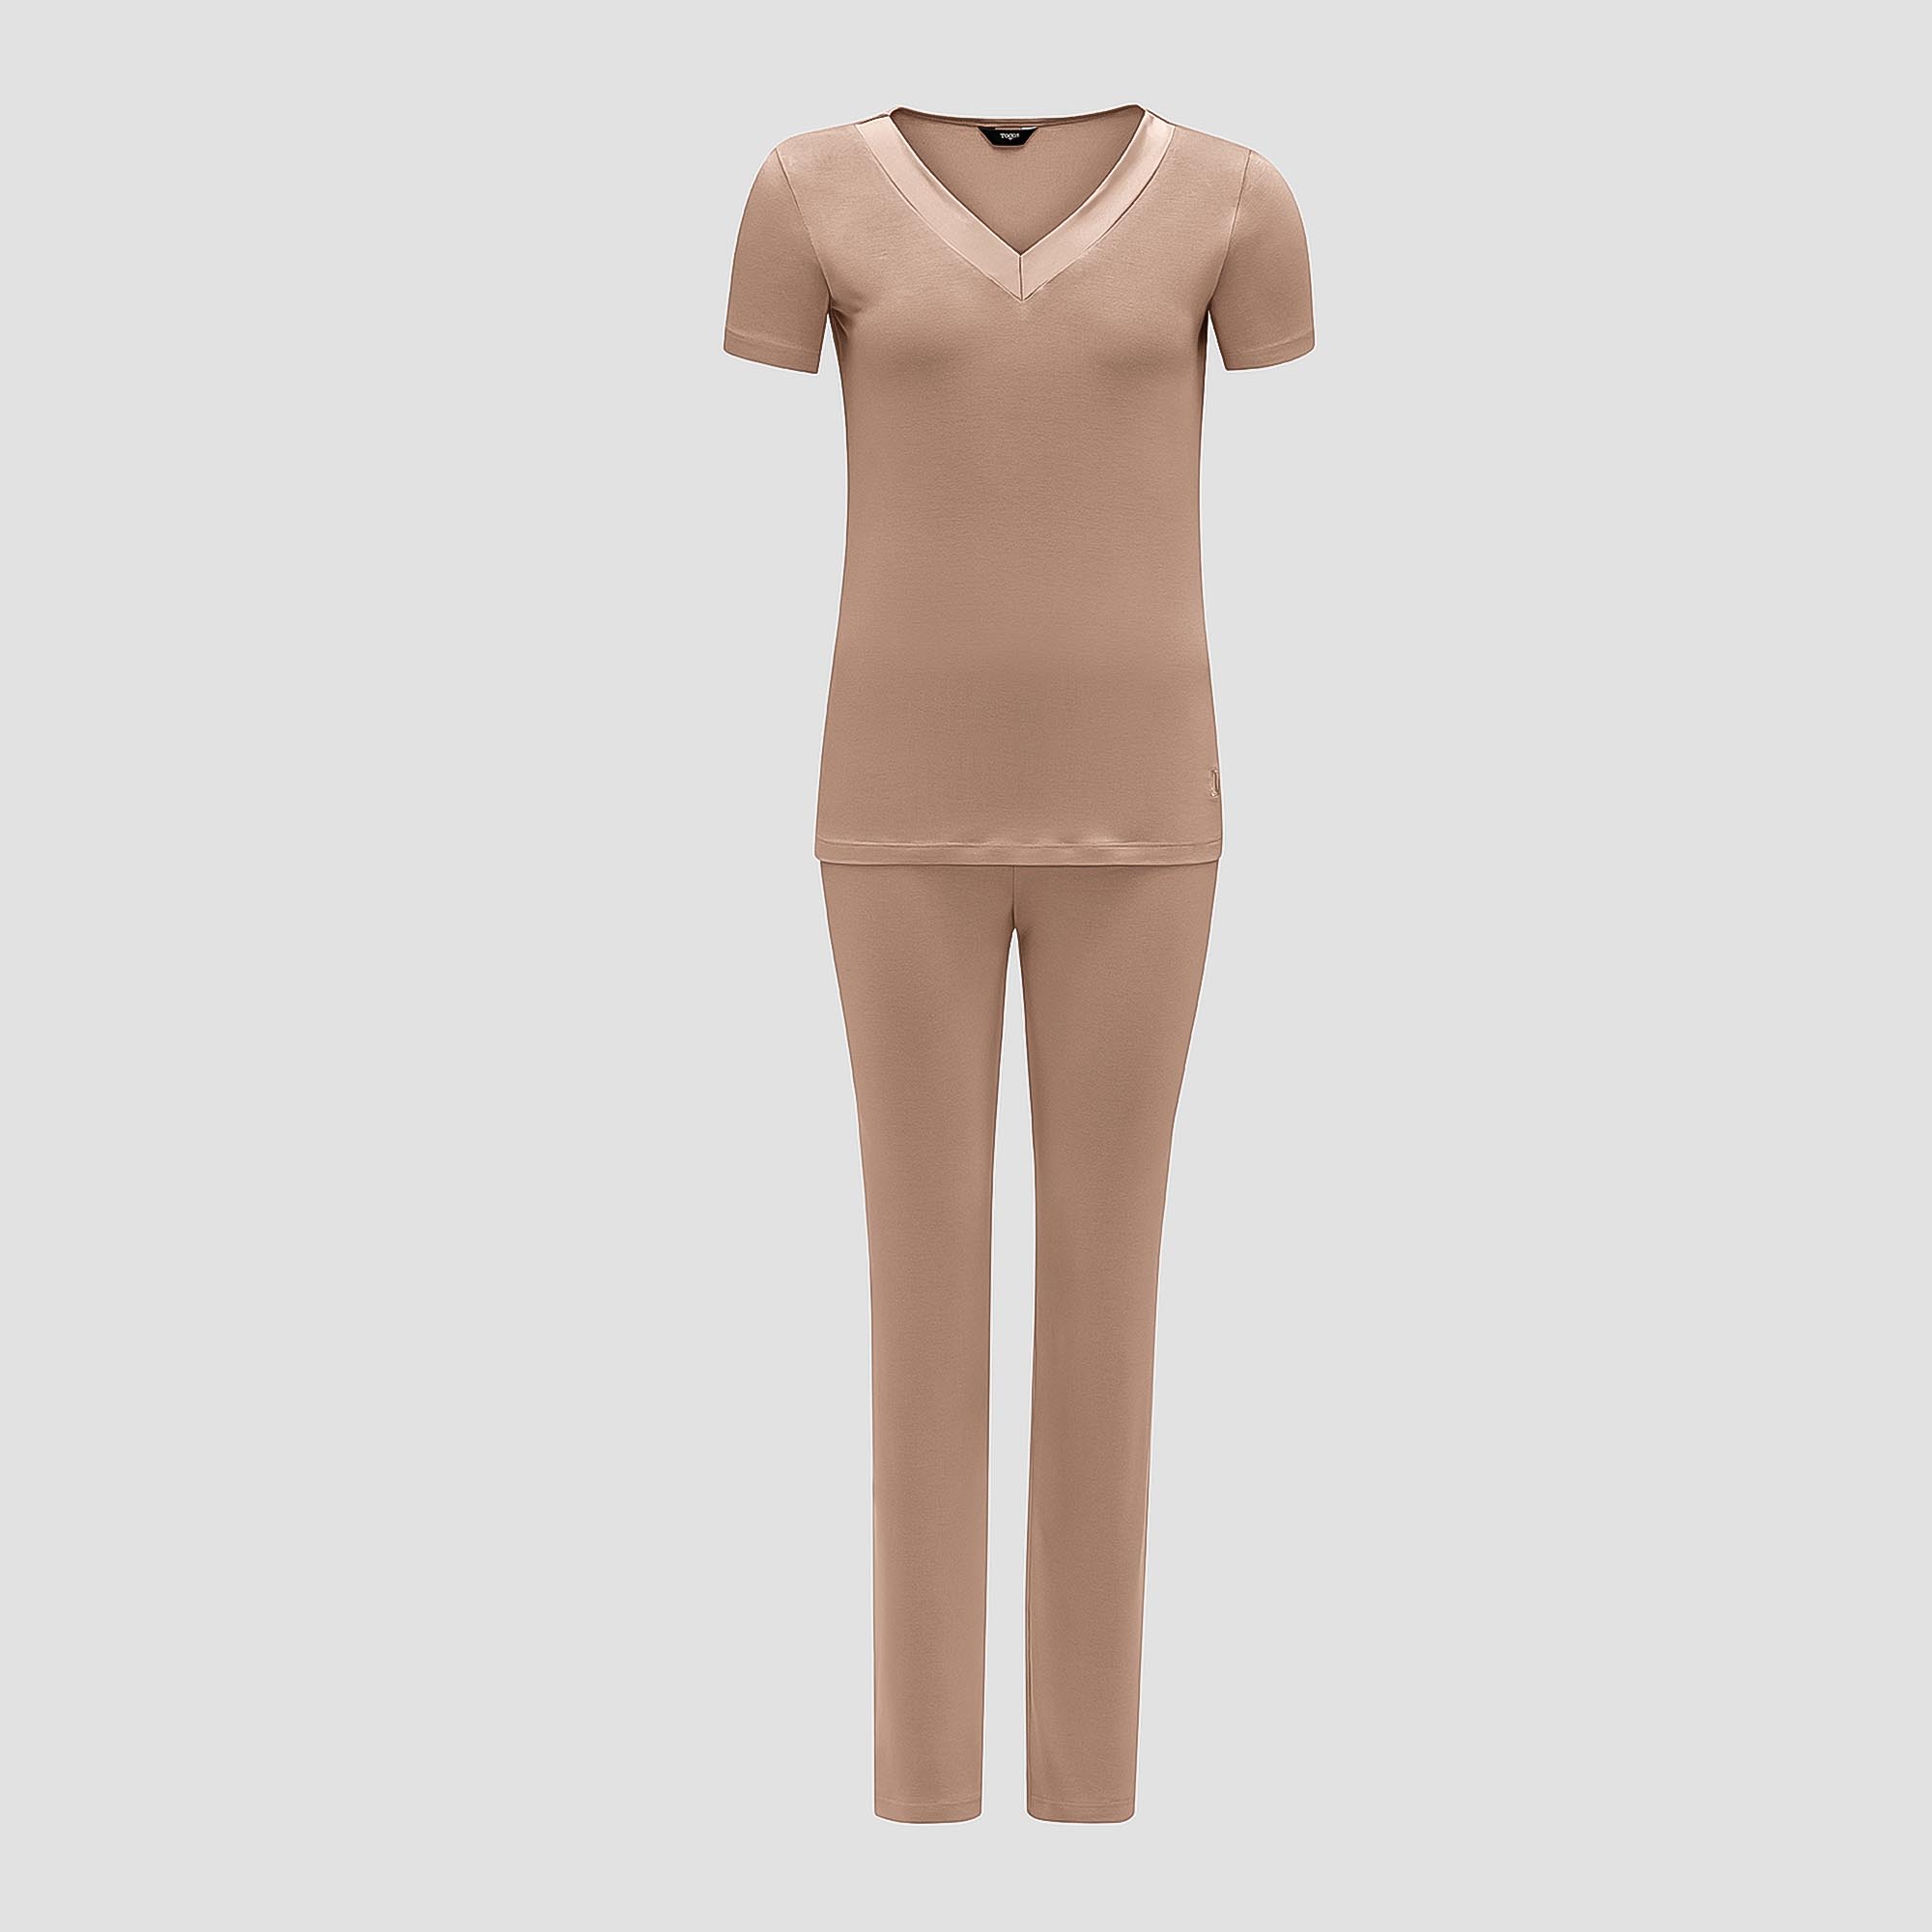 Пижама Togas Ингелла розово-бежевая женская XXL(52) 2 предмета, цвет розовый, размер XXL(52) - фото 1